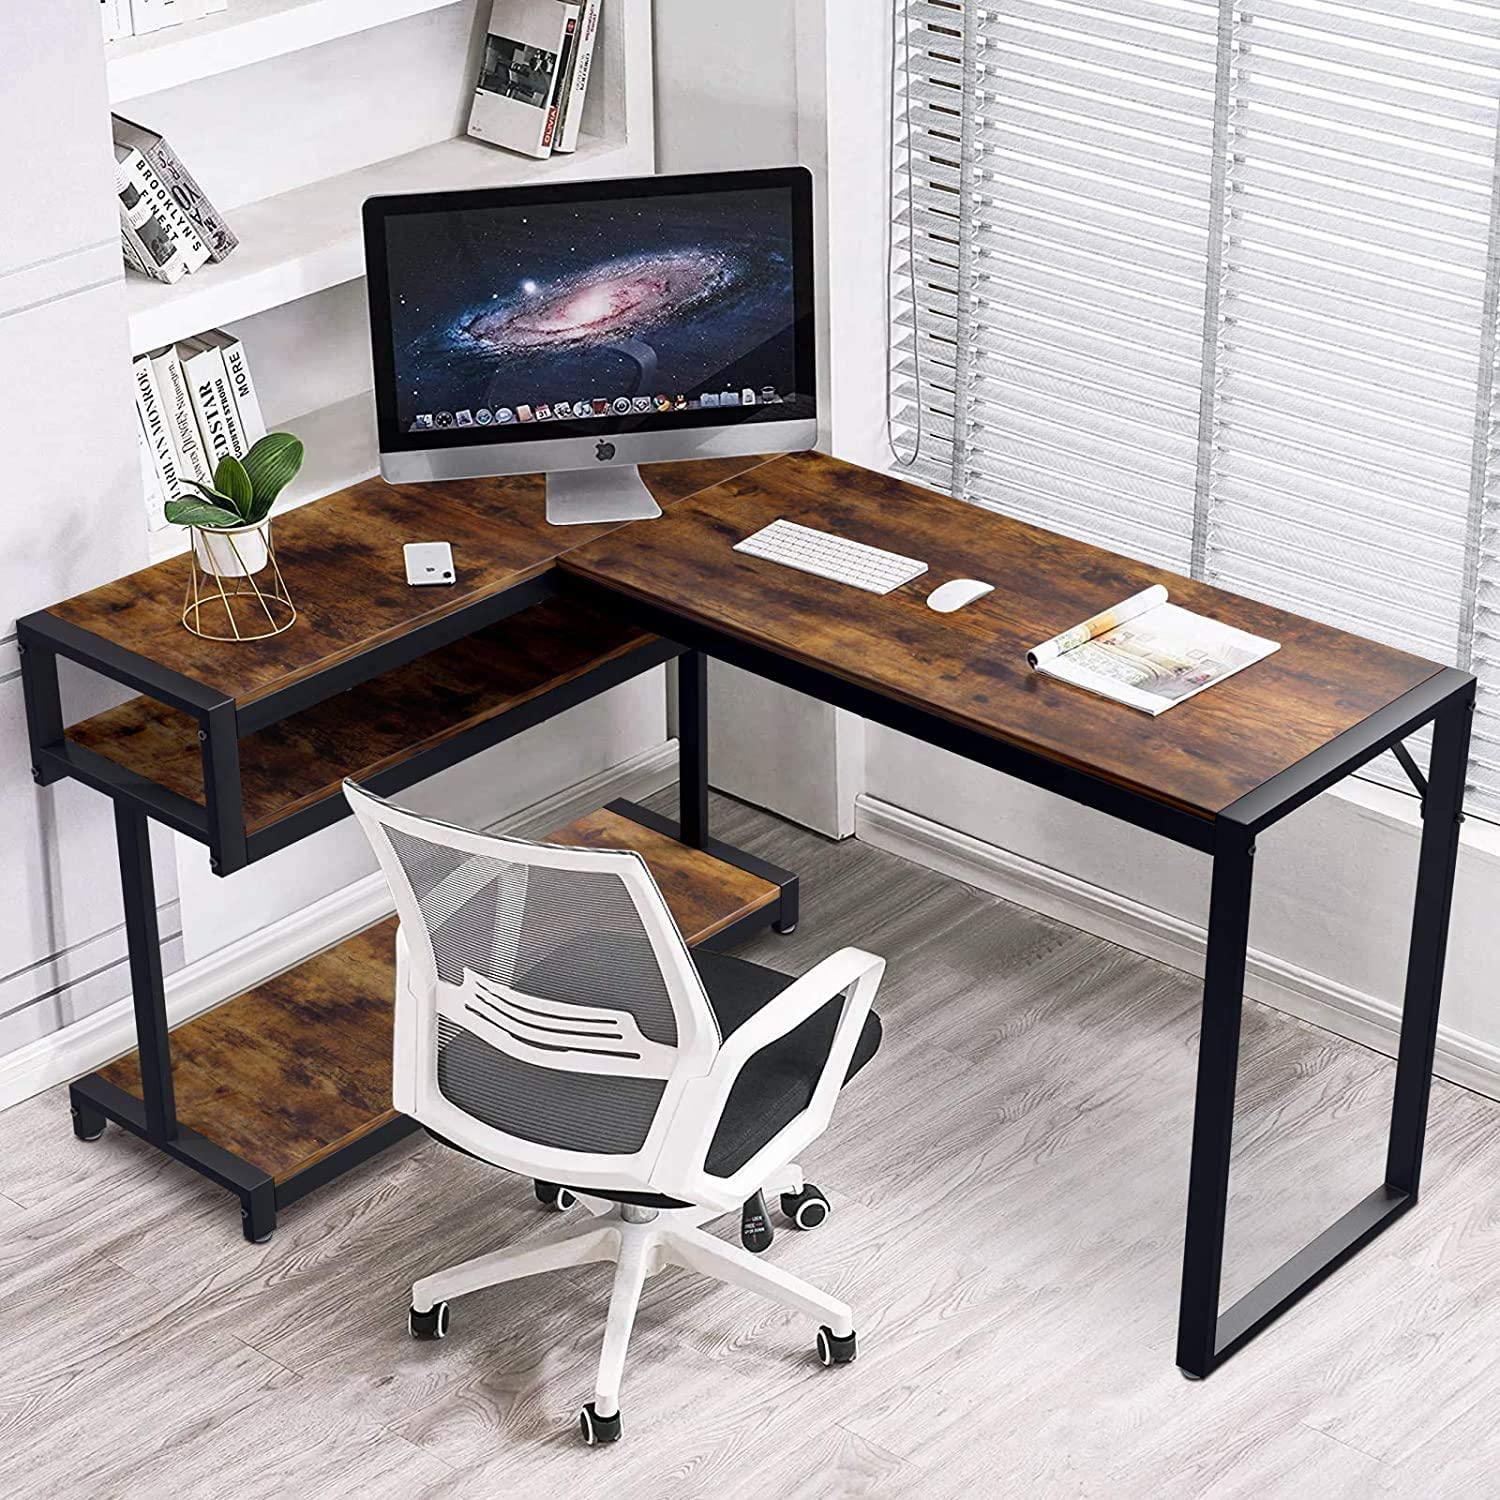 $30 OFF for 56 inch Computer Desk L-shaped Corner Desk + Free Shipping $89.99